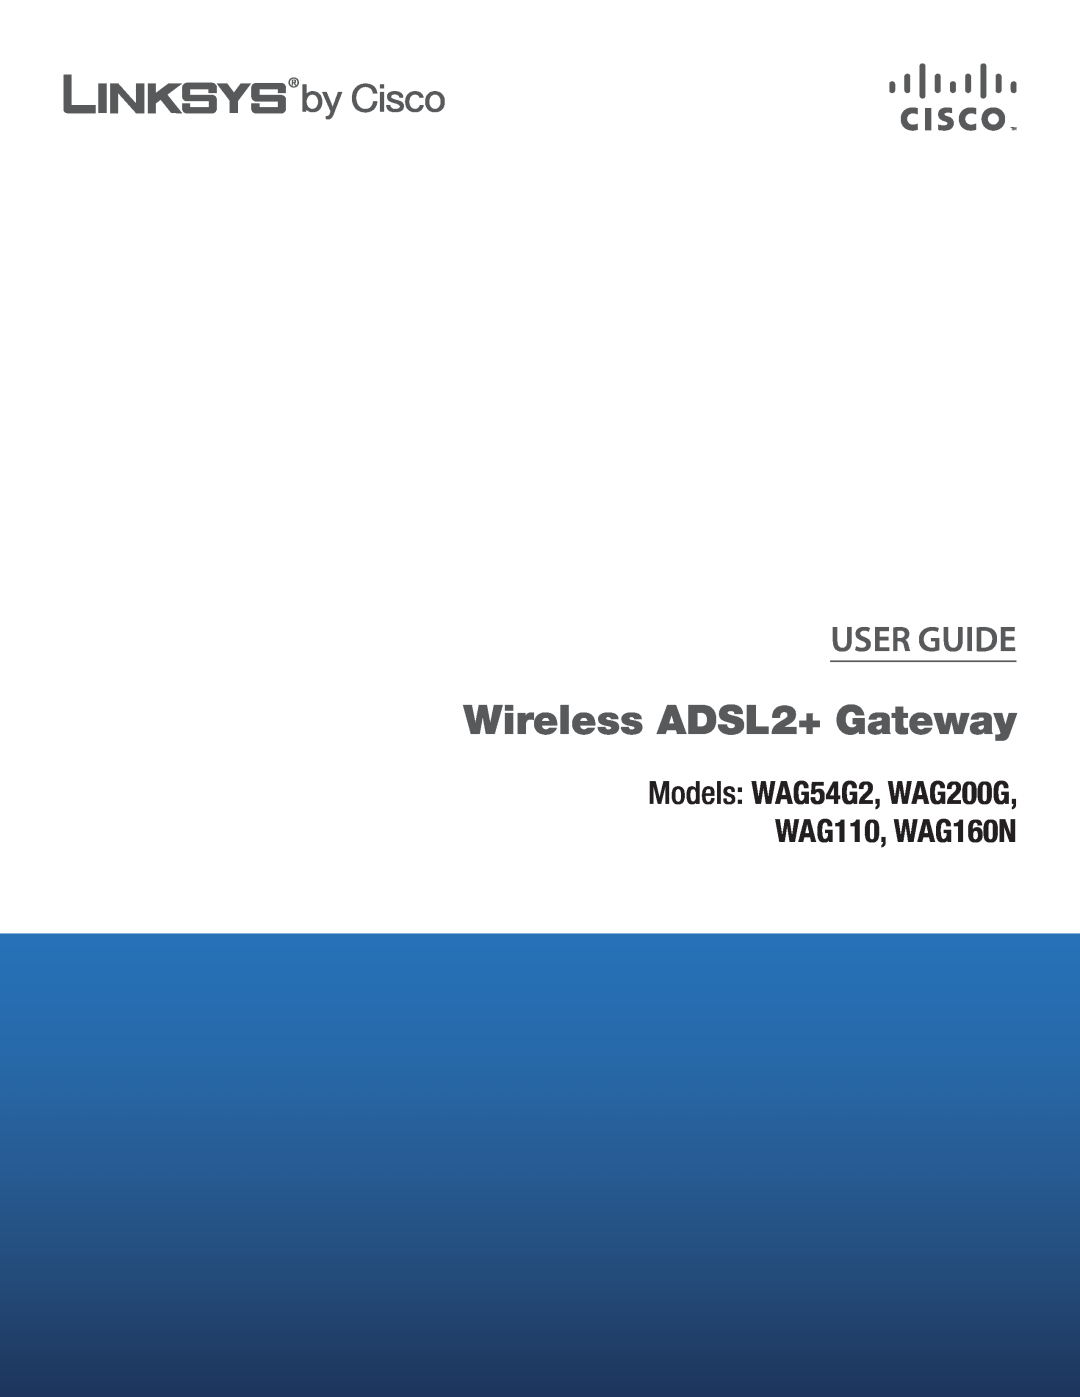 Linksys manual Wireless ADSL2+ Gateway, User Guide, Models WAG54G2, WAG200G WAG110, WAG160N 